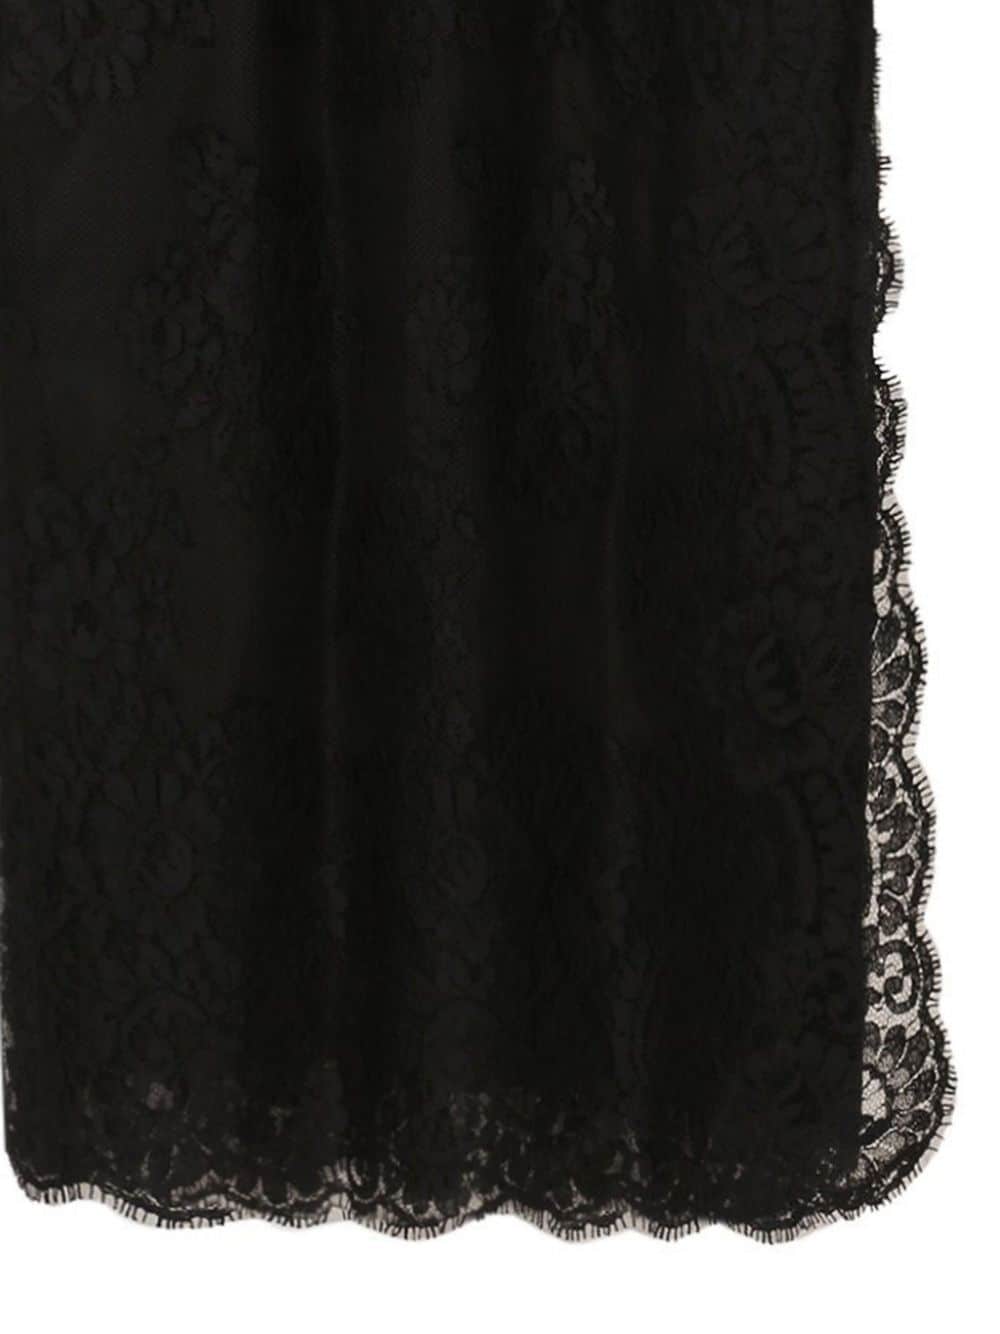 Shop Dolce & Gabbana Black Lace Midi Dress